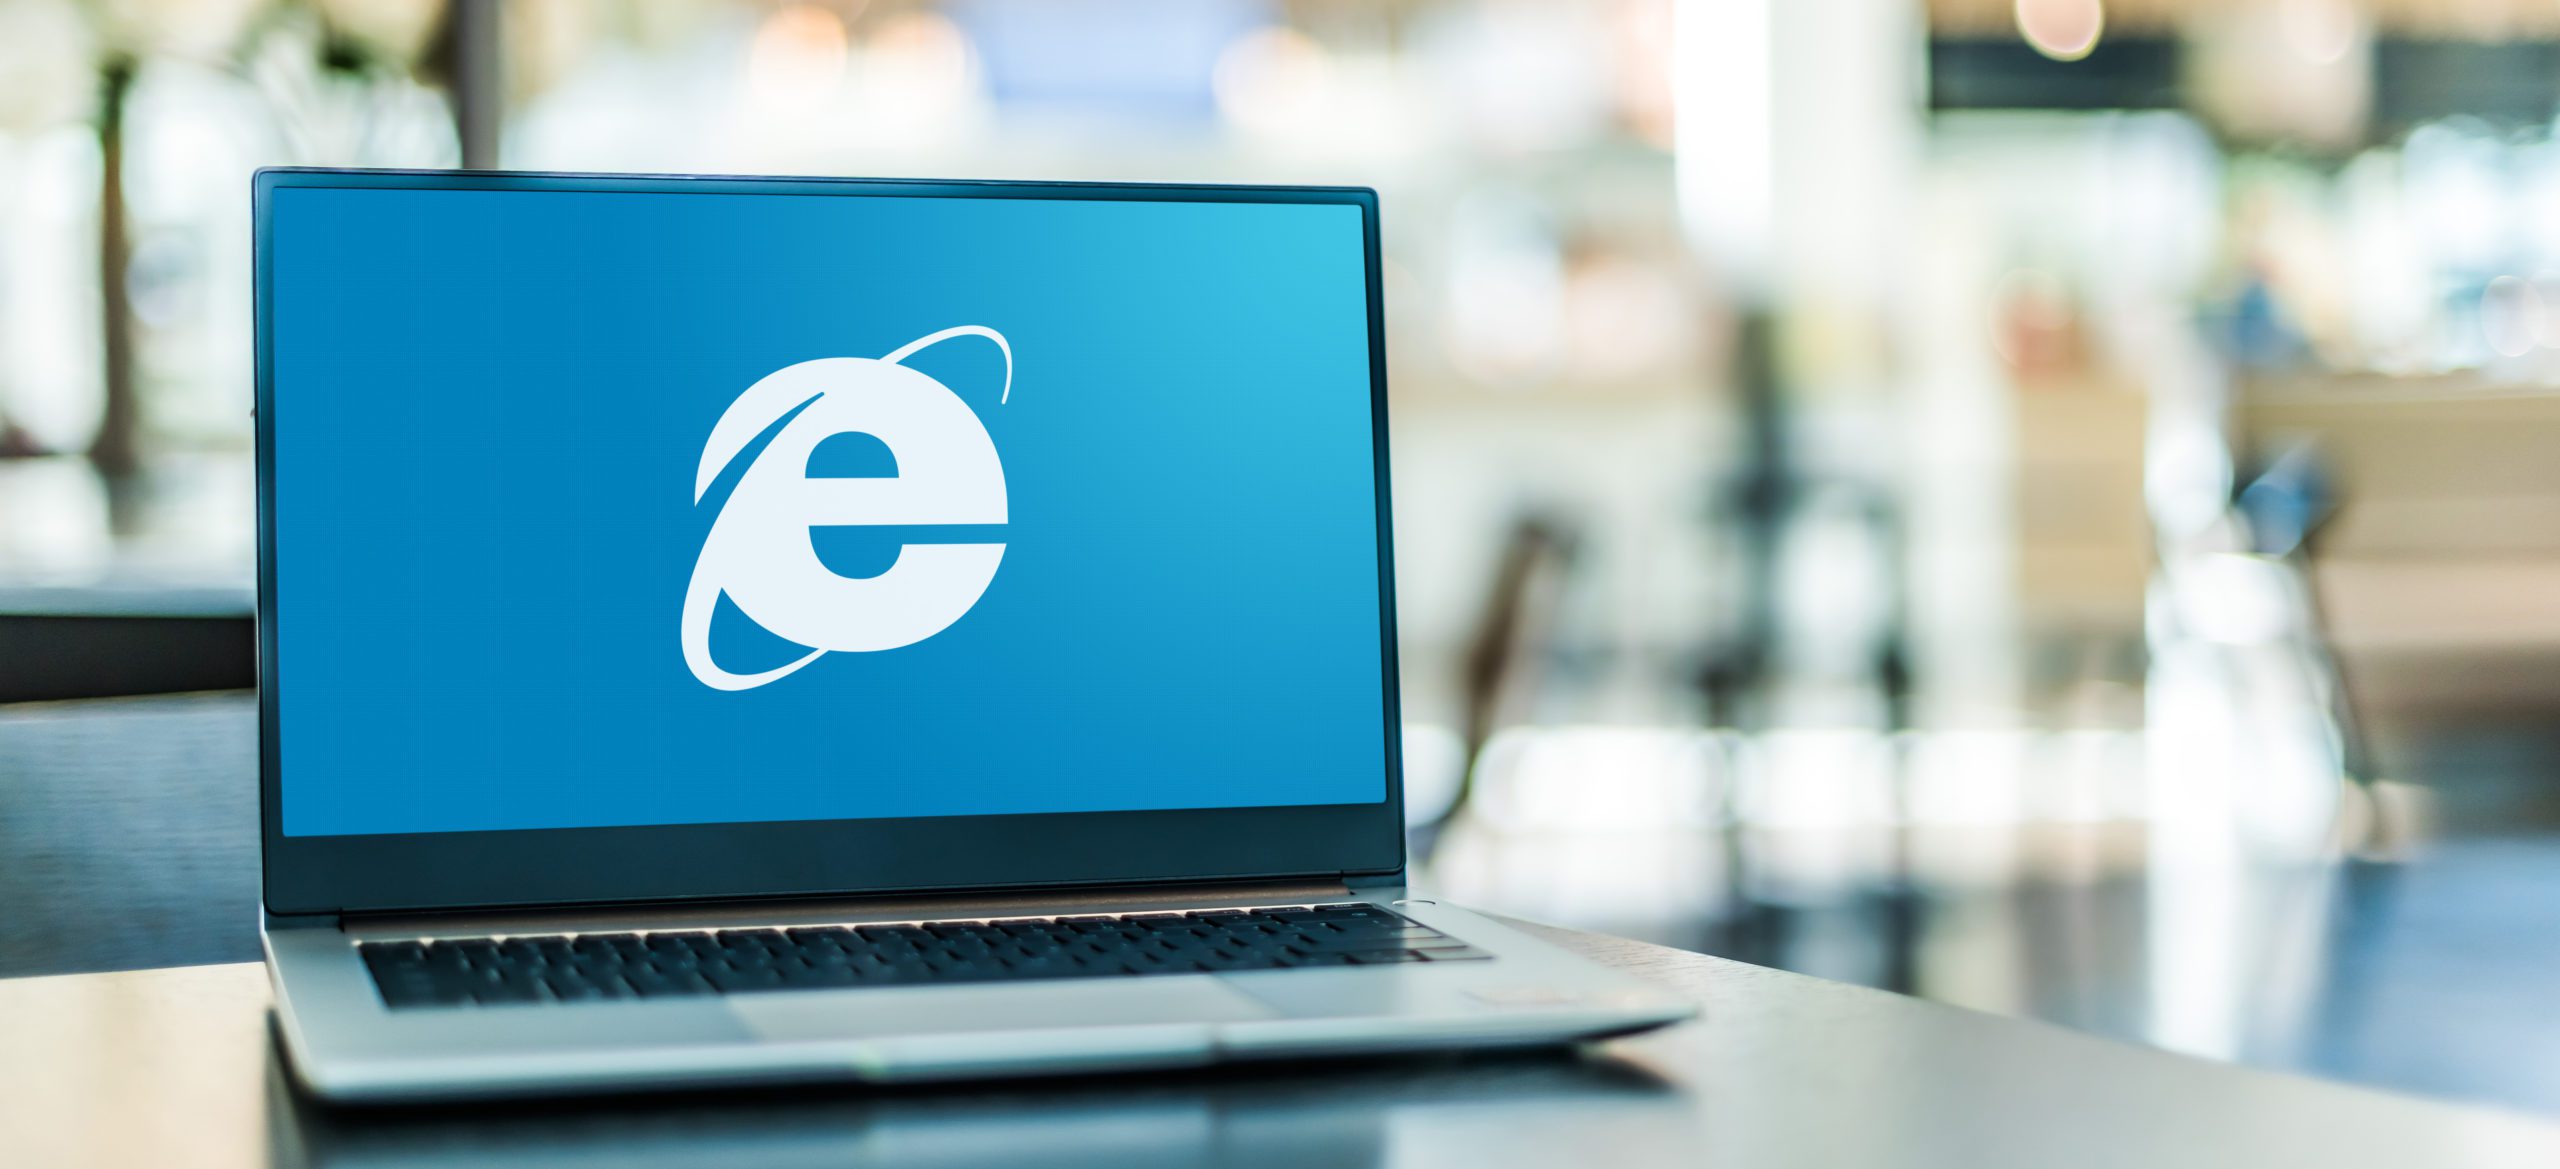 Computer with Internet Explorer logo.